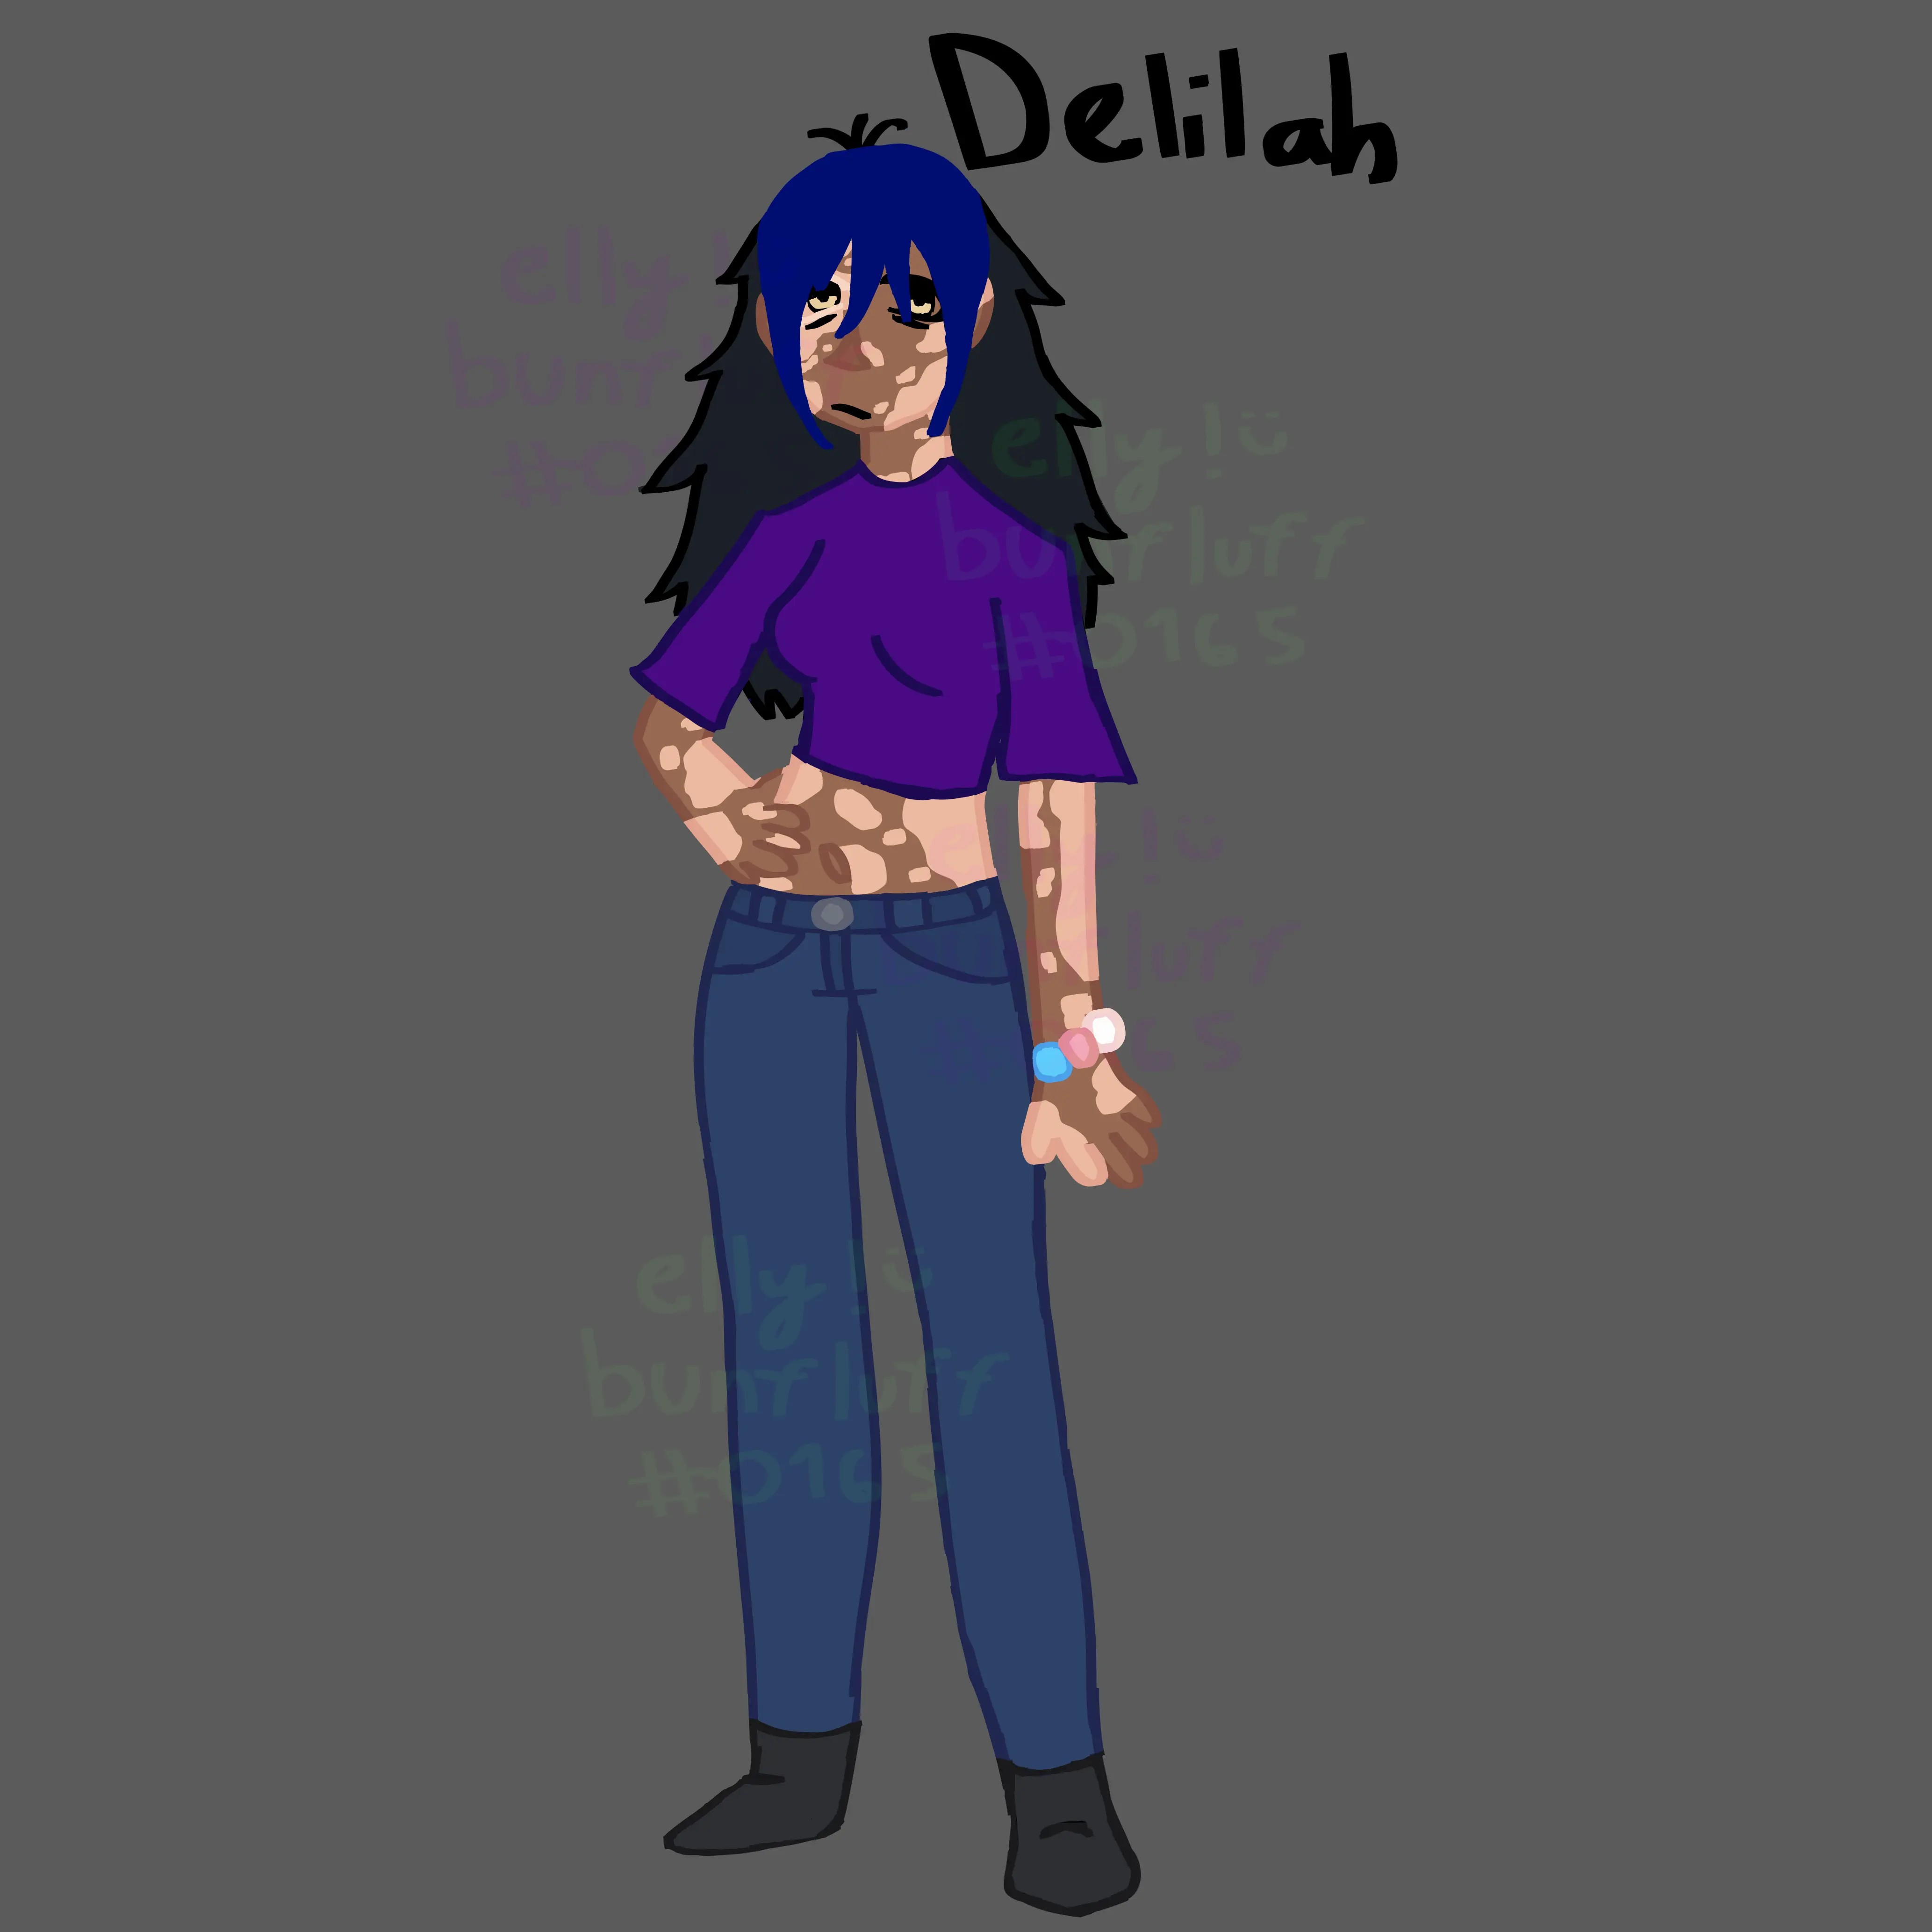 delilah, a oc of mine that has vitligo